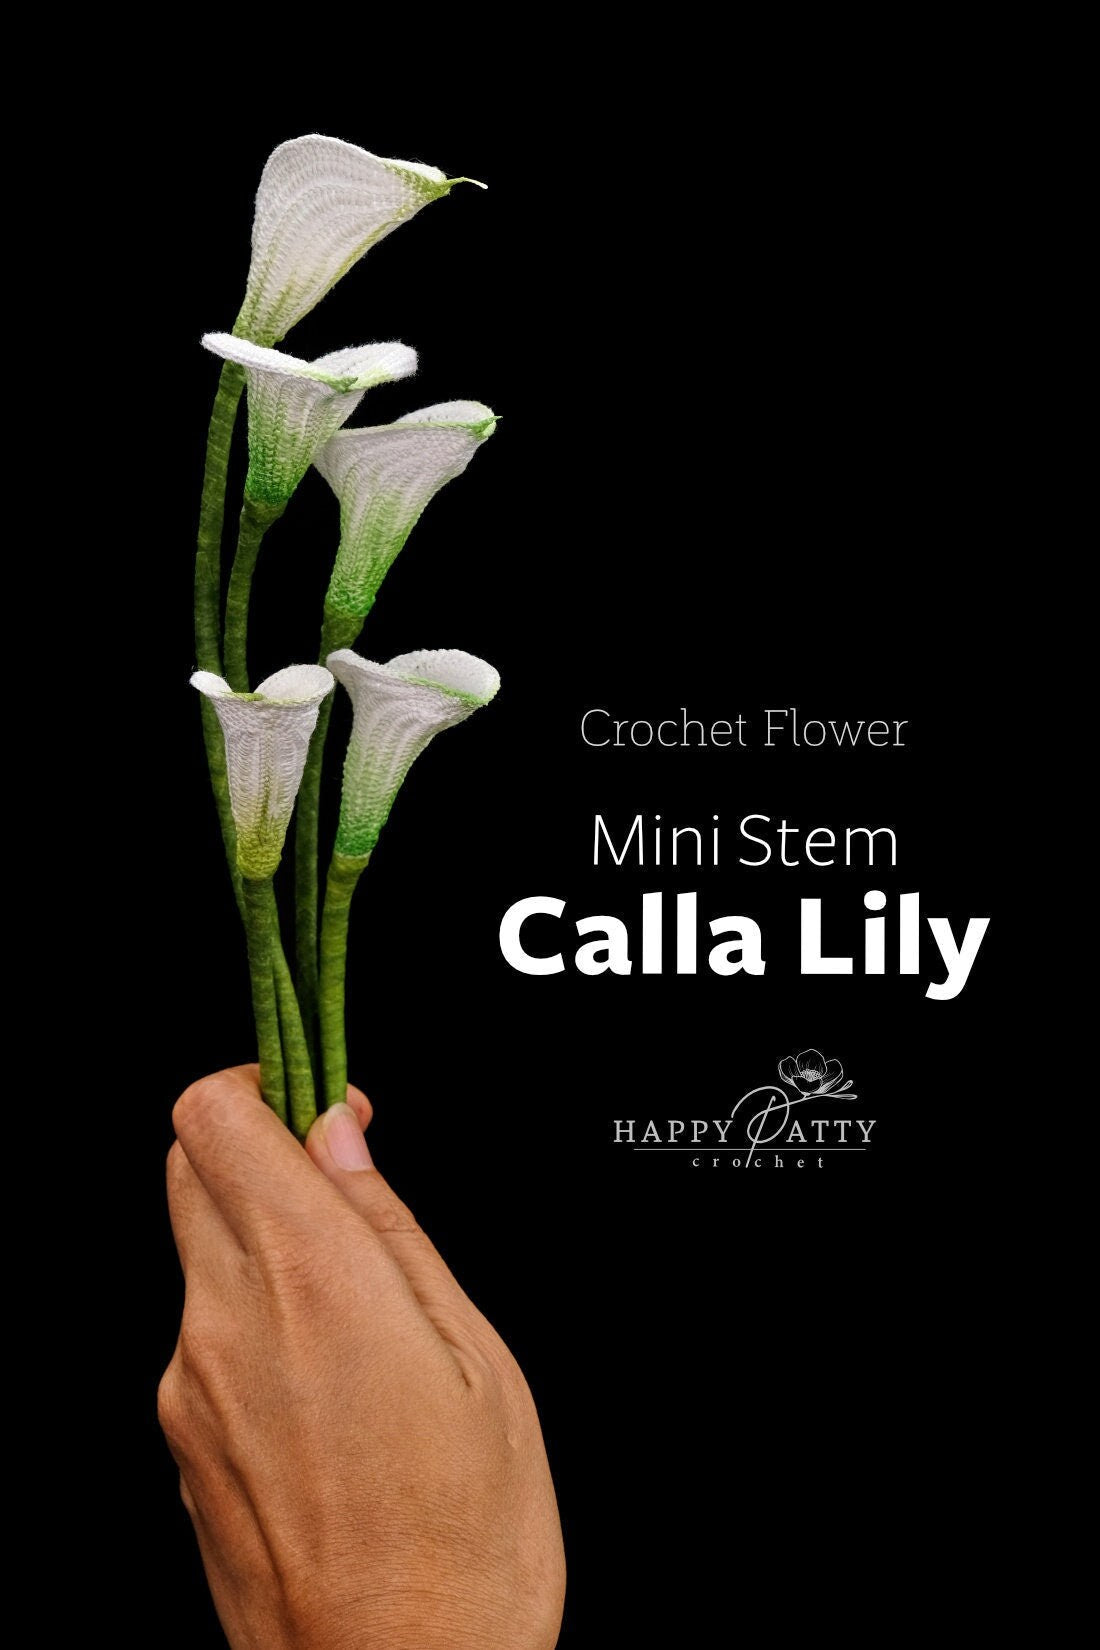 Crochet Mini Stem Calla Lily Pattern - Crochet Flower Pattern for a Miniature Calla Lily